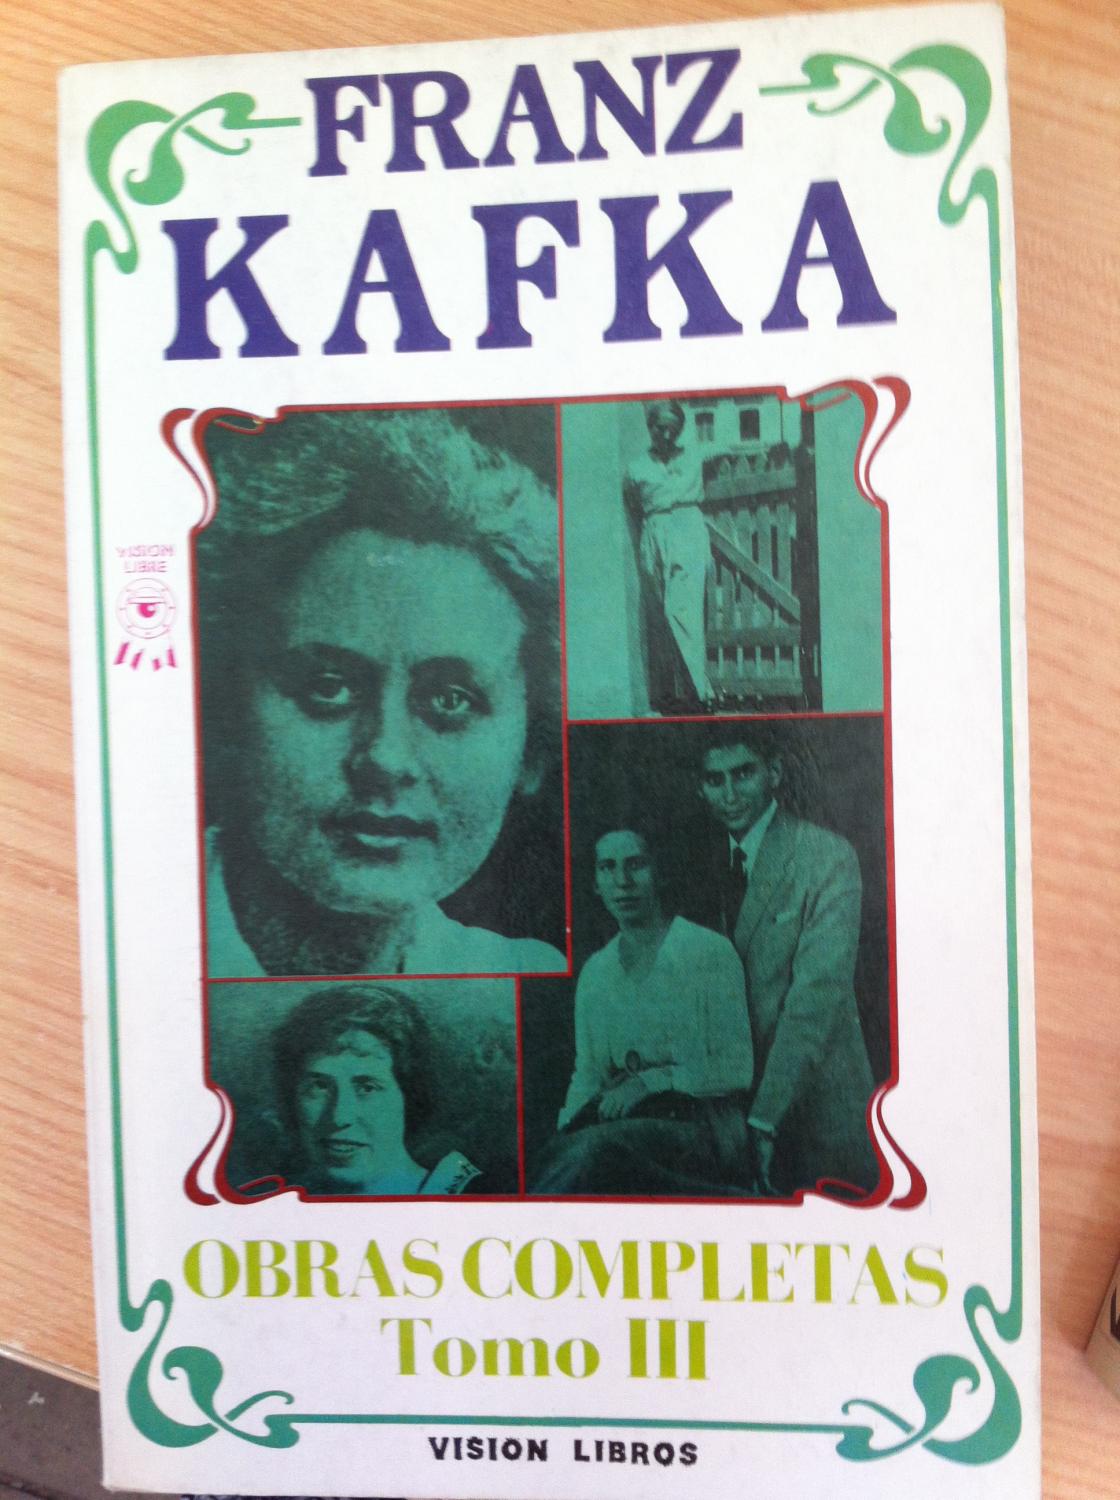 FRANK KAFKA. Obras Completas. Tomo III: Blumfeld, un Solterón / El Castillo - Franz Kafka